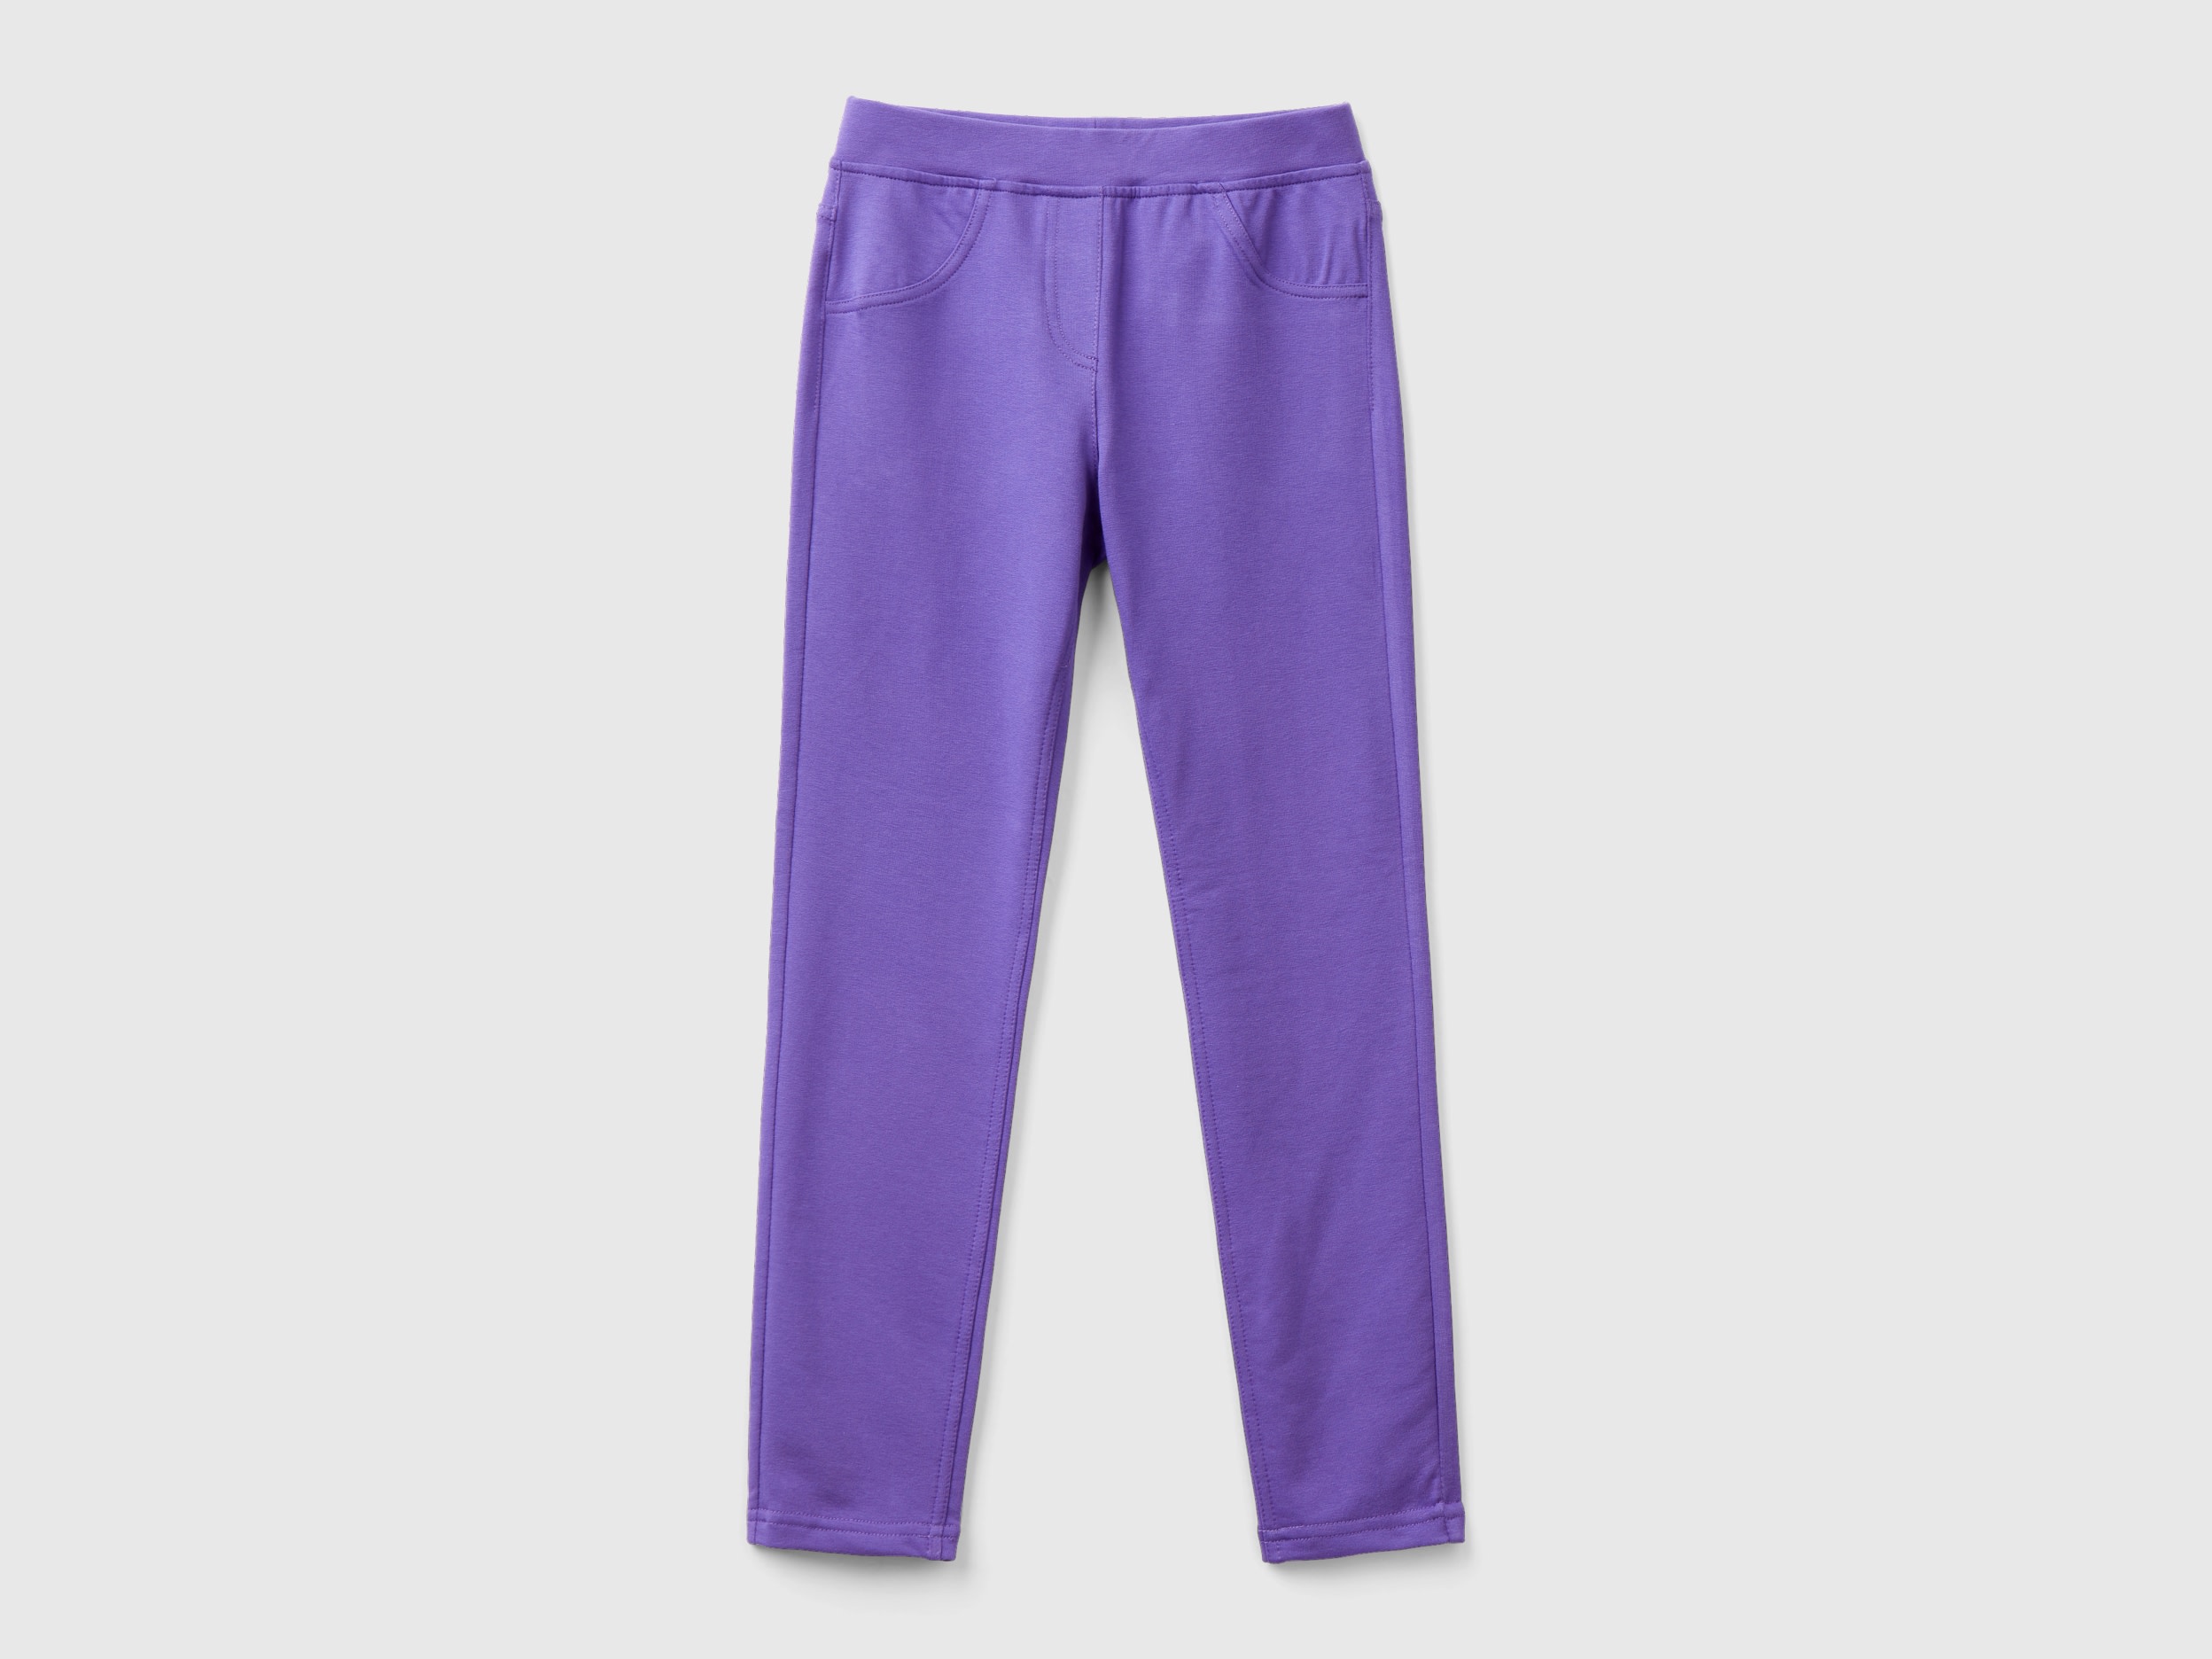 Benetton, Stretch Sweat Fabric Jeggings, size 2XL, Violet, Kids